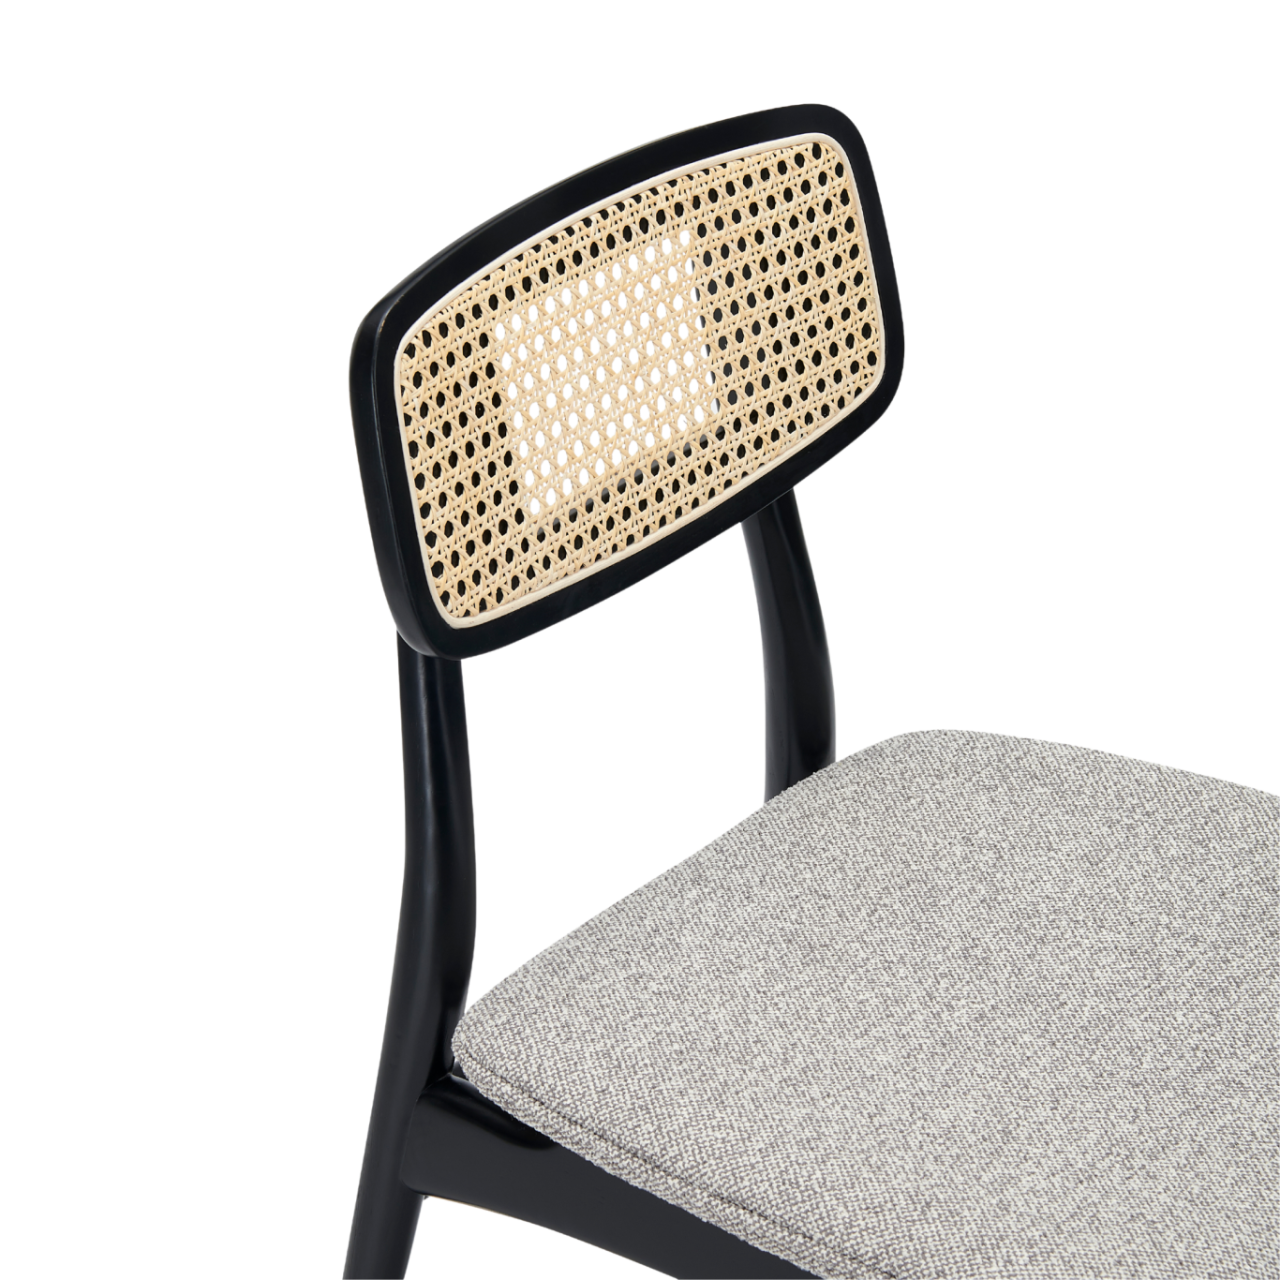 Elder Dining Chair-Lyon Steel